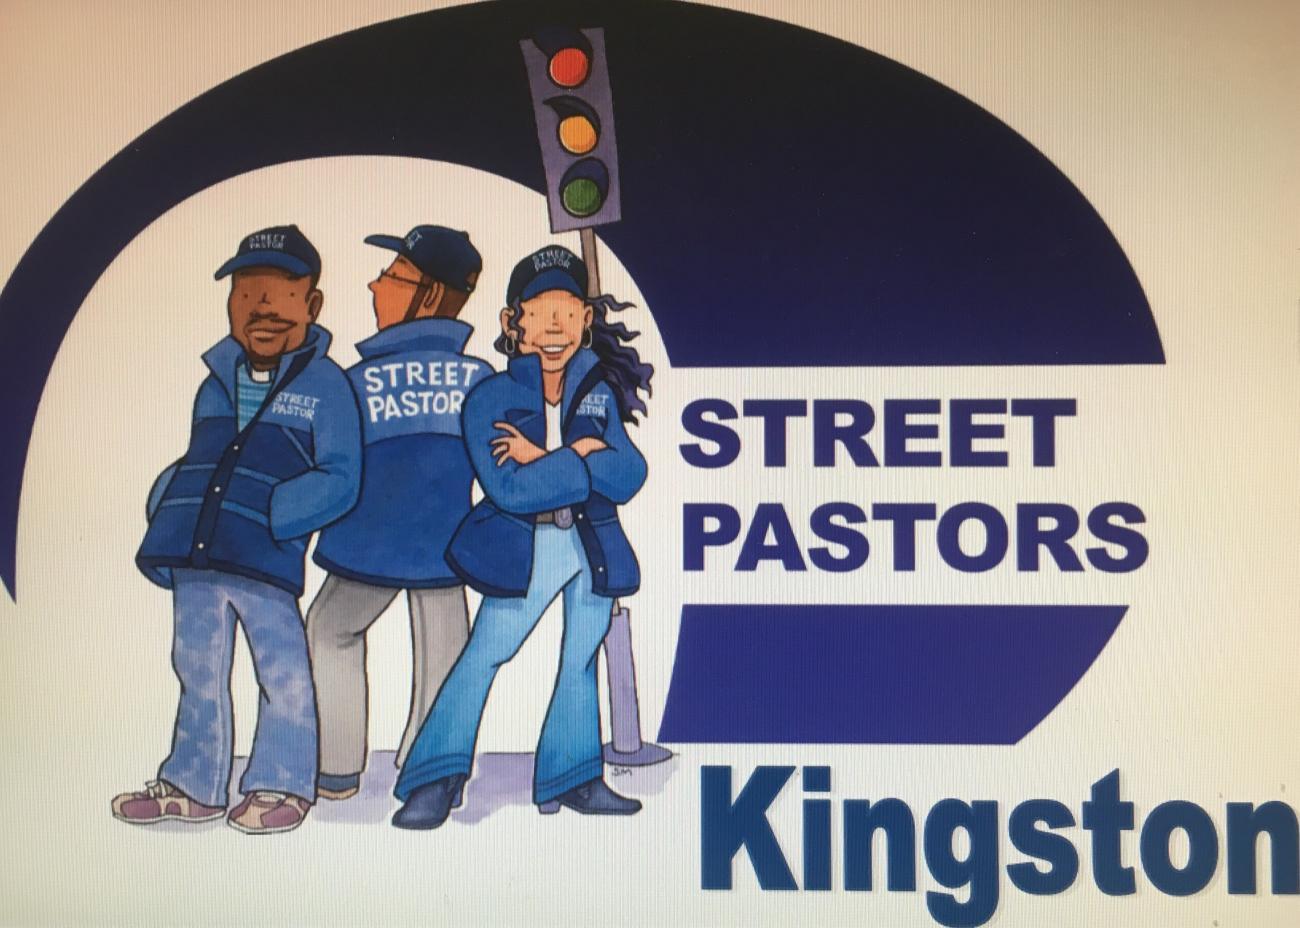 10.30am - Street Pastors